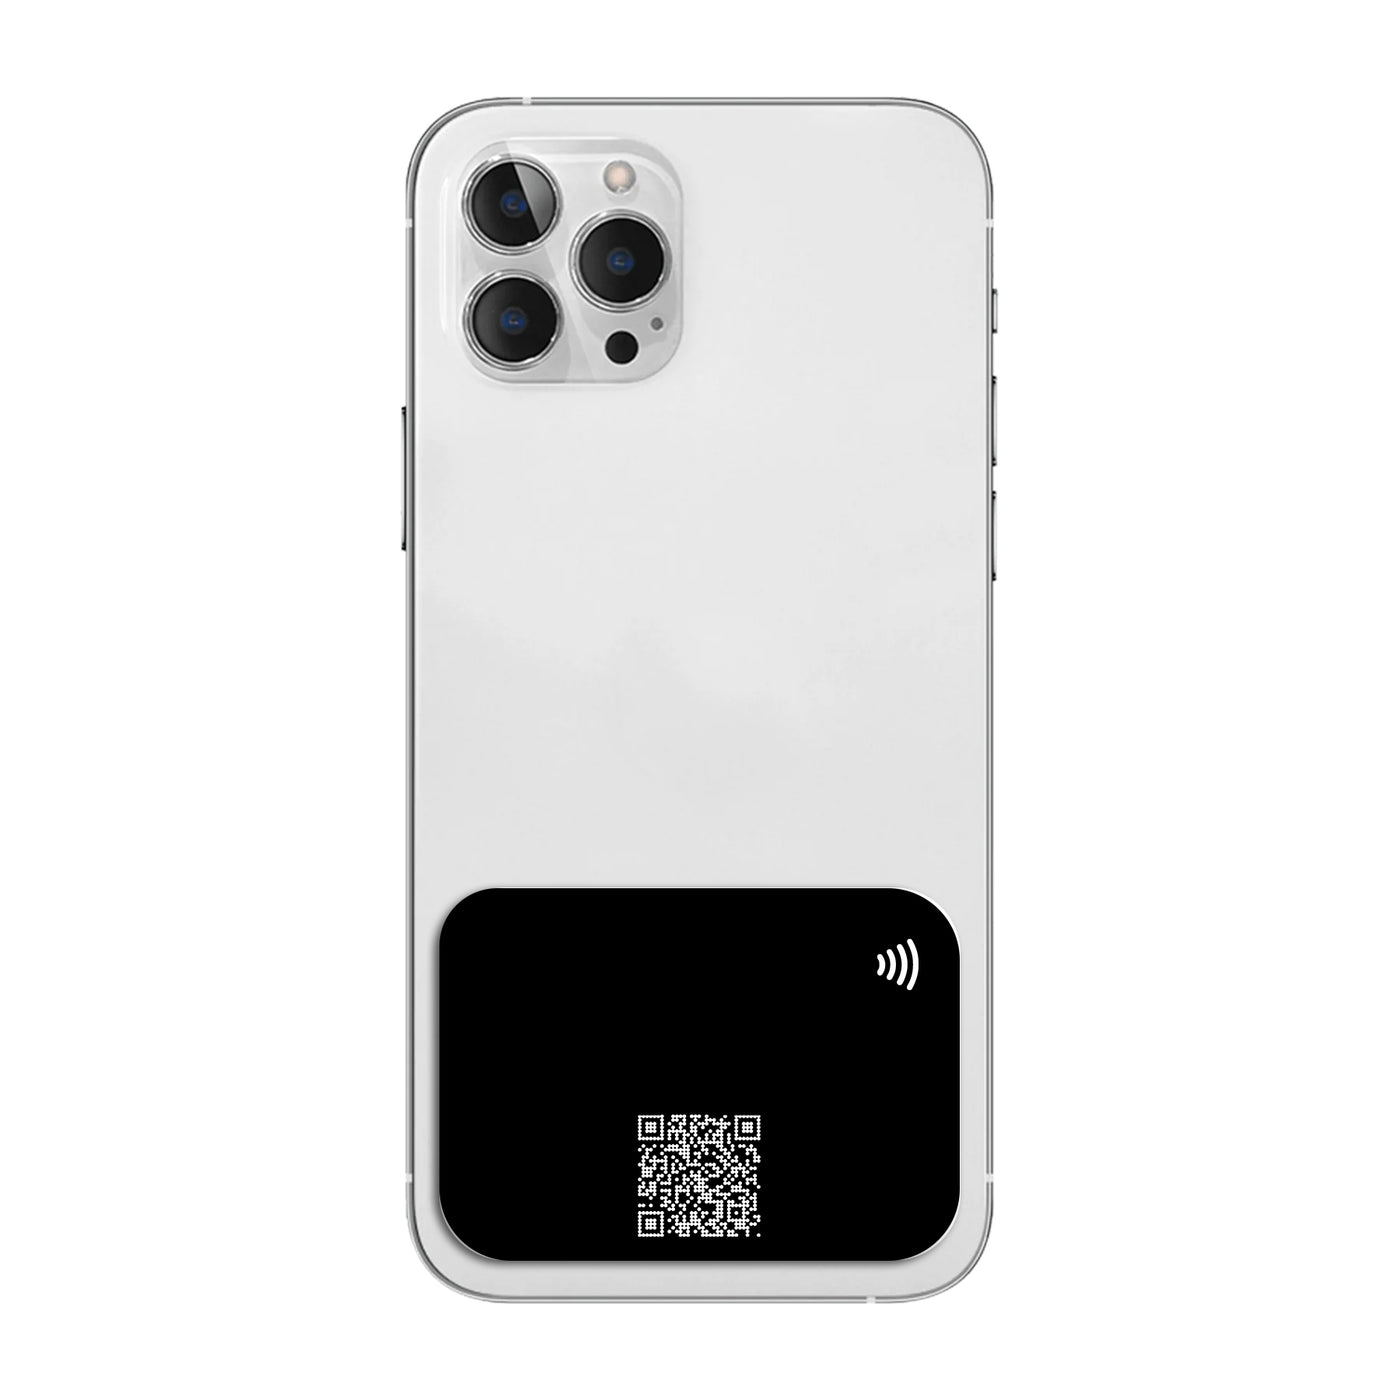 TAPiTAG NFC QR MINICARD NFC-Enabled Digital Business Card